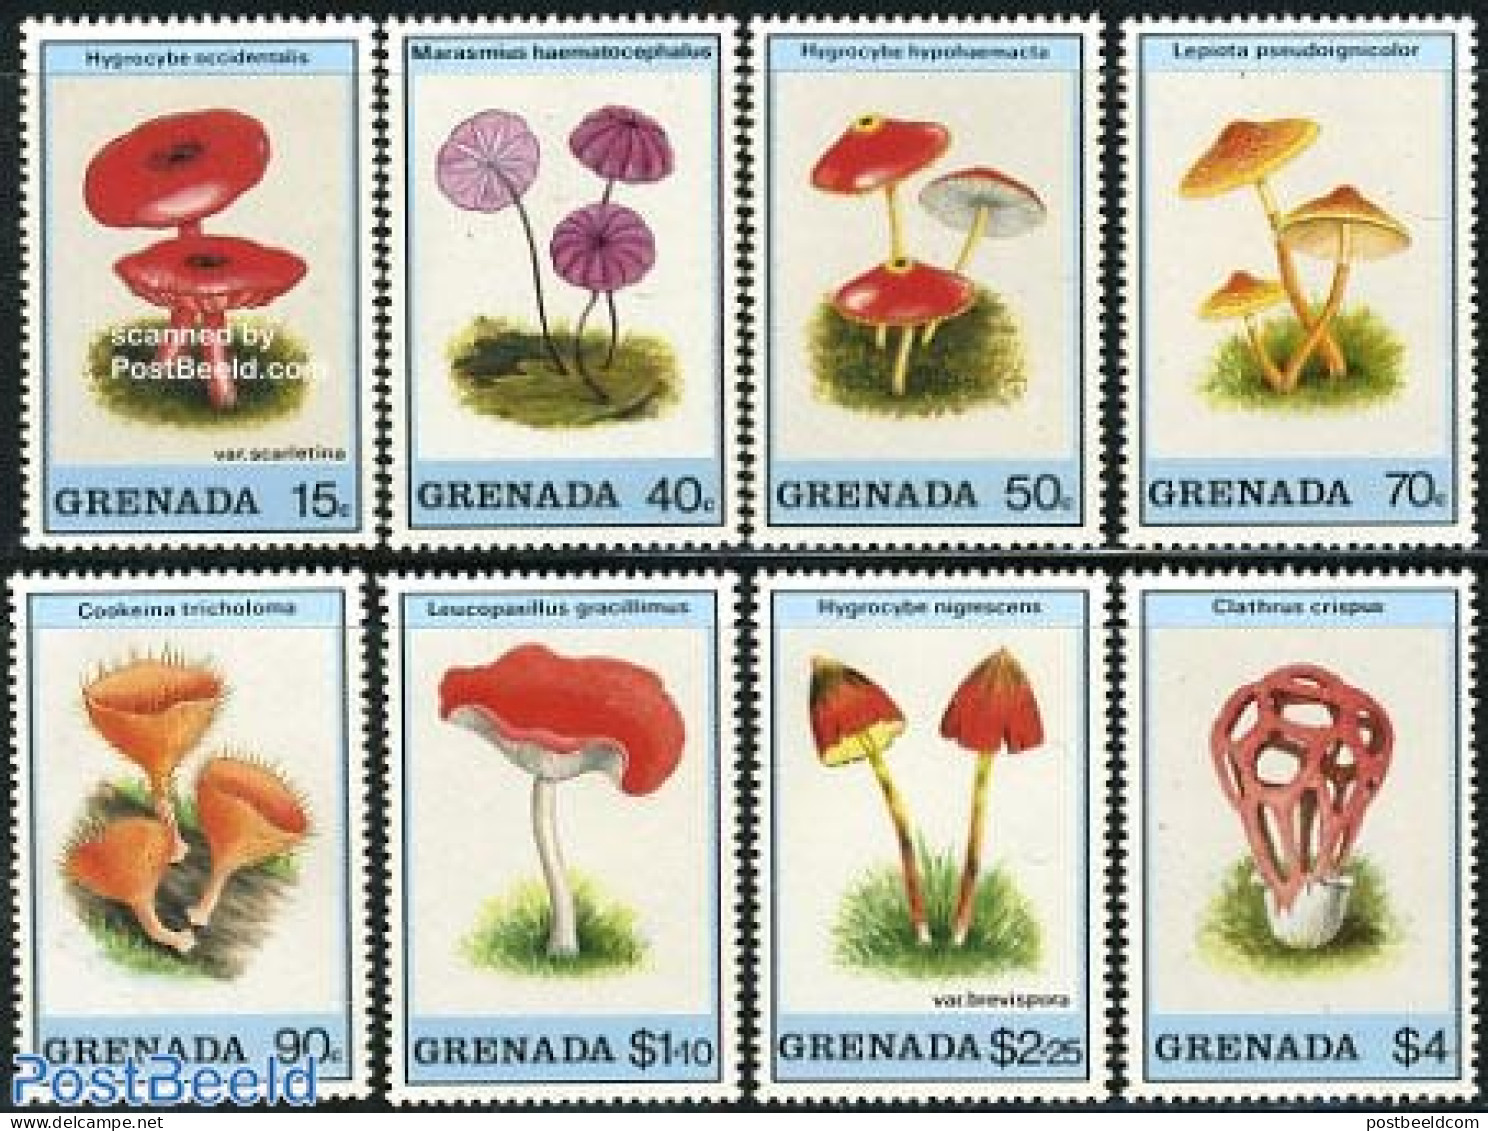 Grenada 1989 Mushrooms 8v, Mint NH, Nature - Mushrooms - Champignons